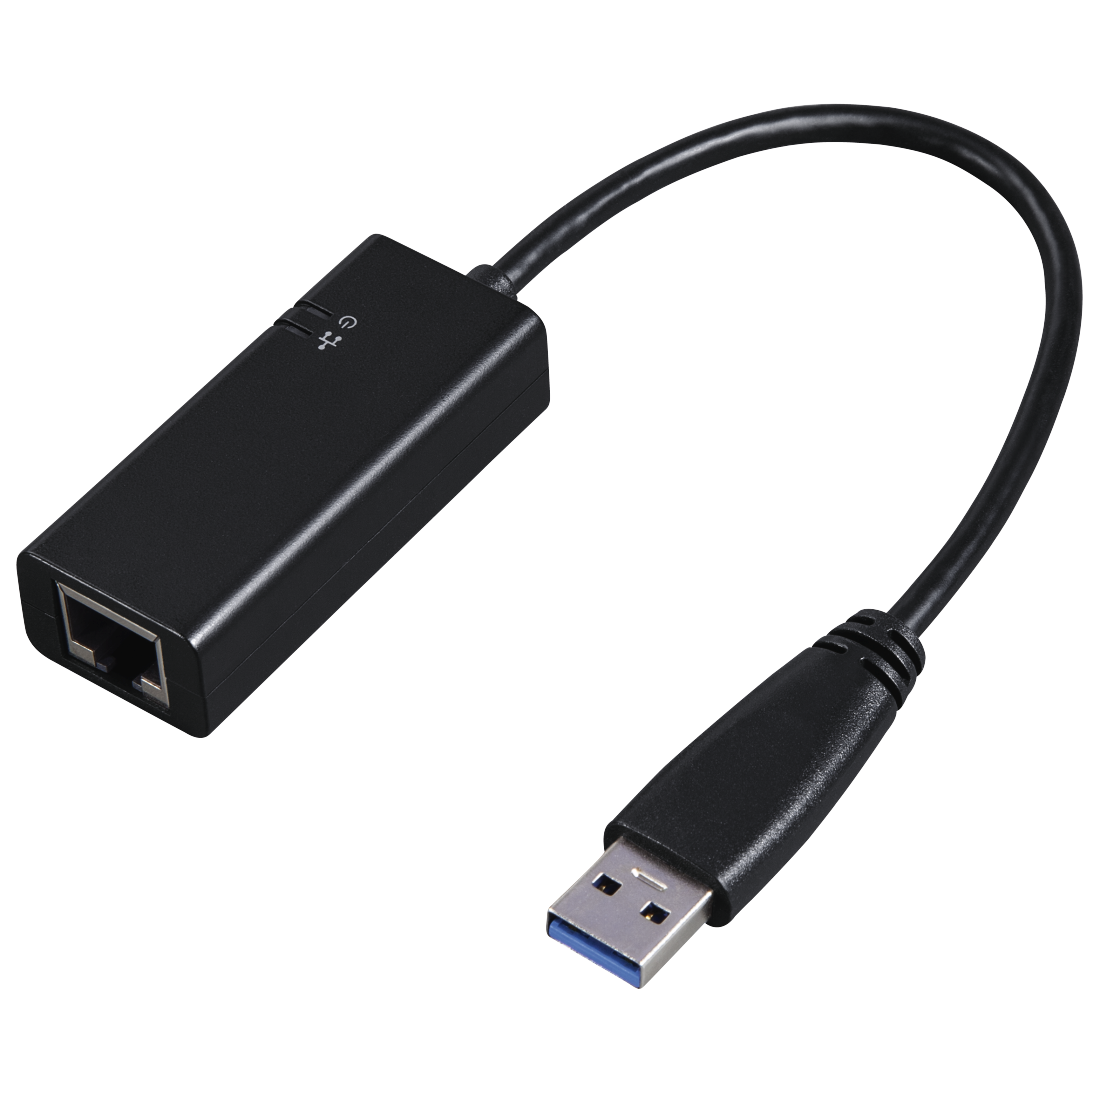 00053173 Hama USB 3.0 Gigabit Ethernet Adapter, 10/100/1000 Mbps ...